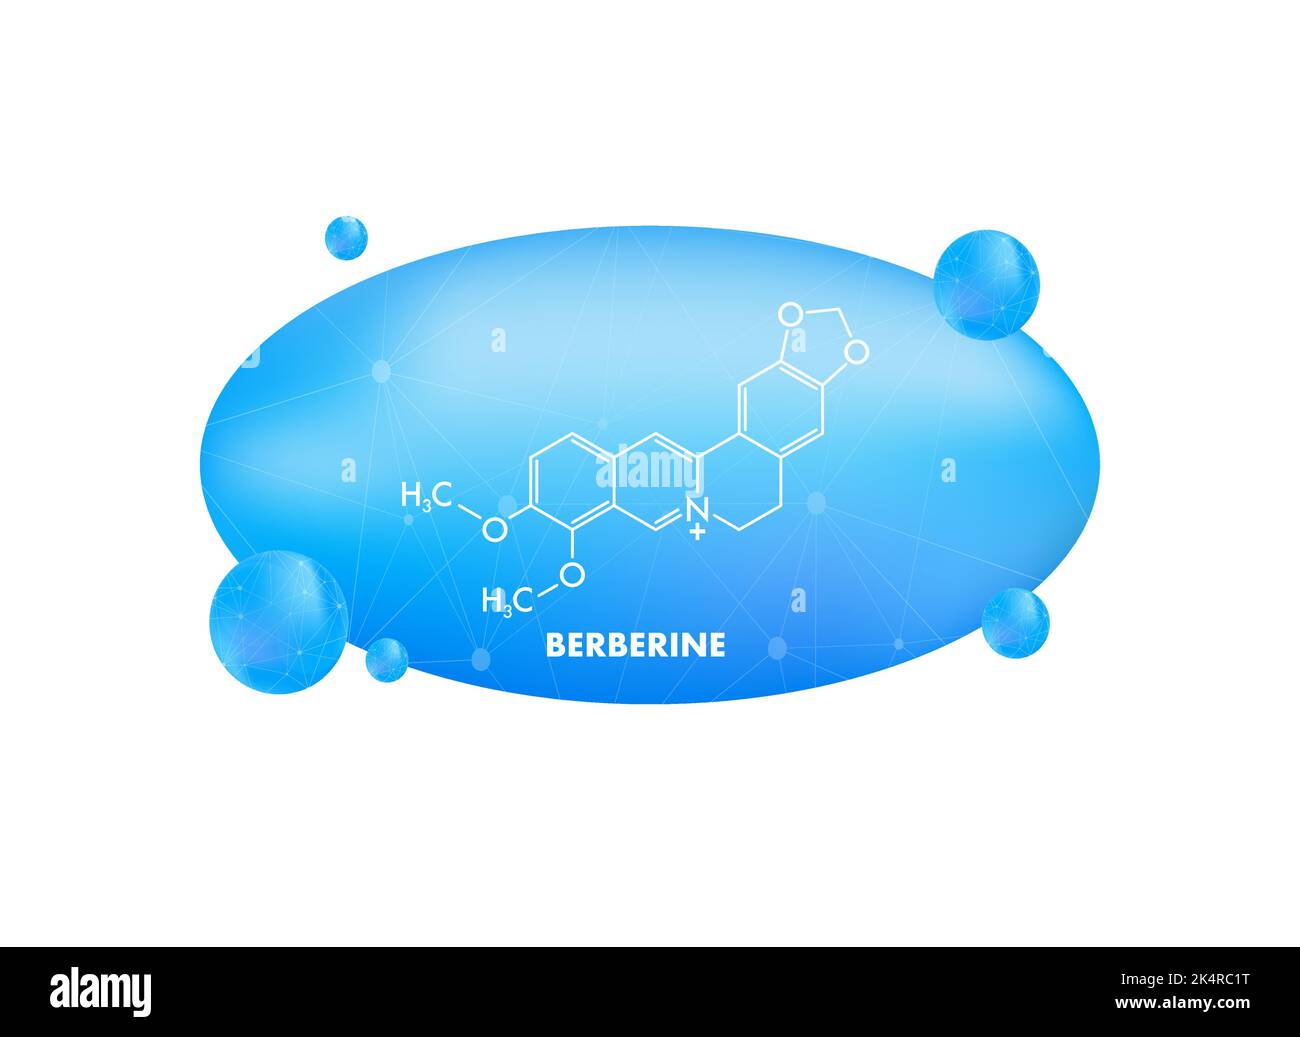 Berberine concept chemical formula icon label, text font vector illustration Stock Vector